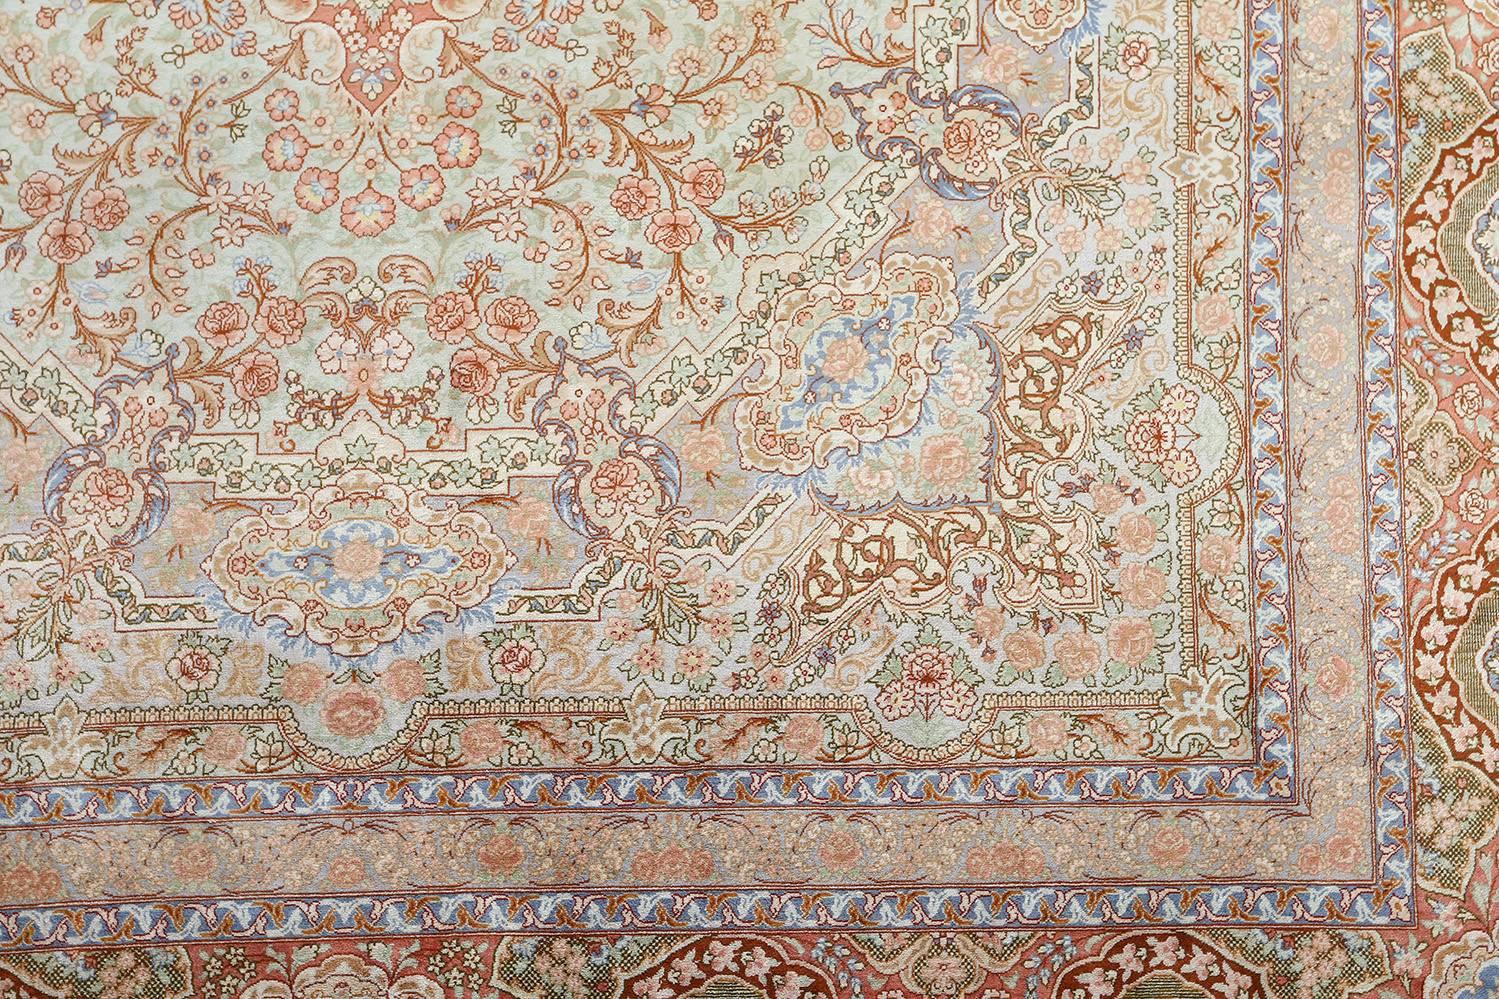 Fine Silk Vintage Qum Persian Rug.Size: 6 ft 6 in x 9 ft 11 in (1.98 m x 3.02 m) 2